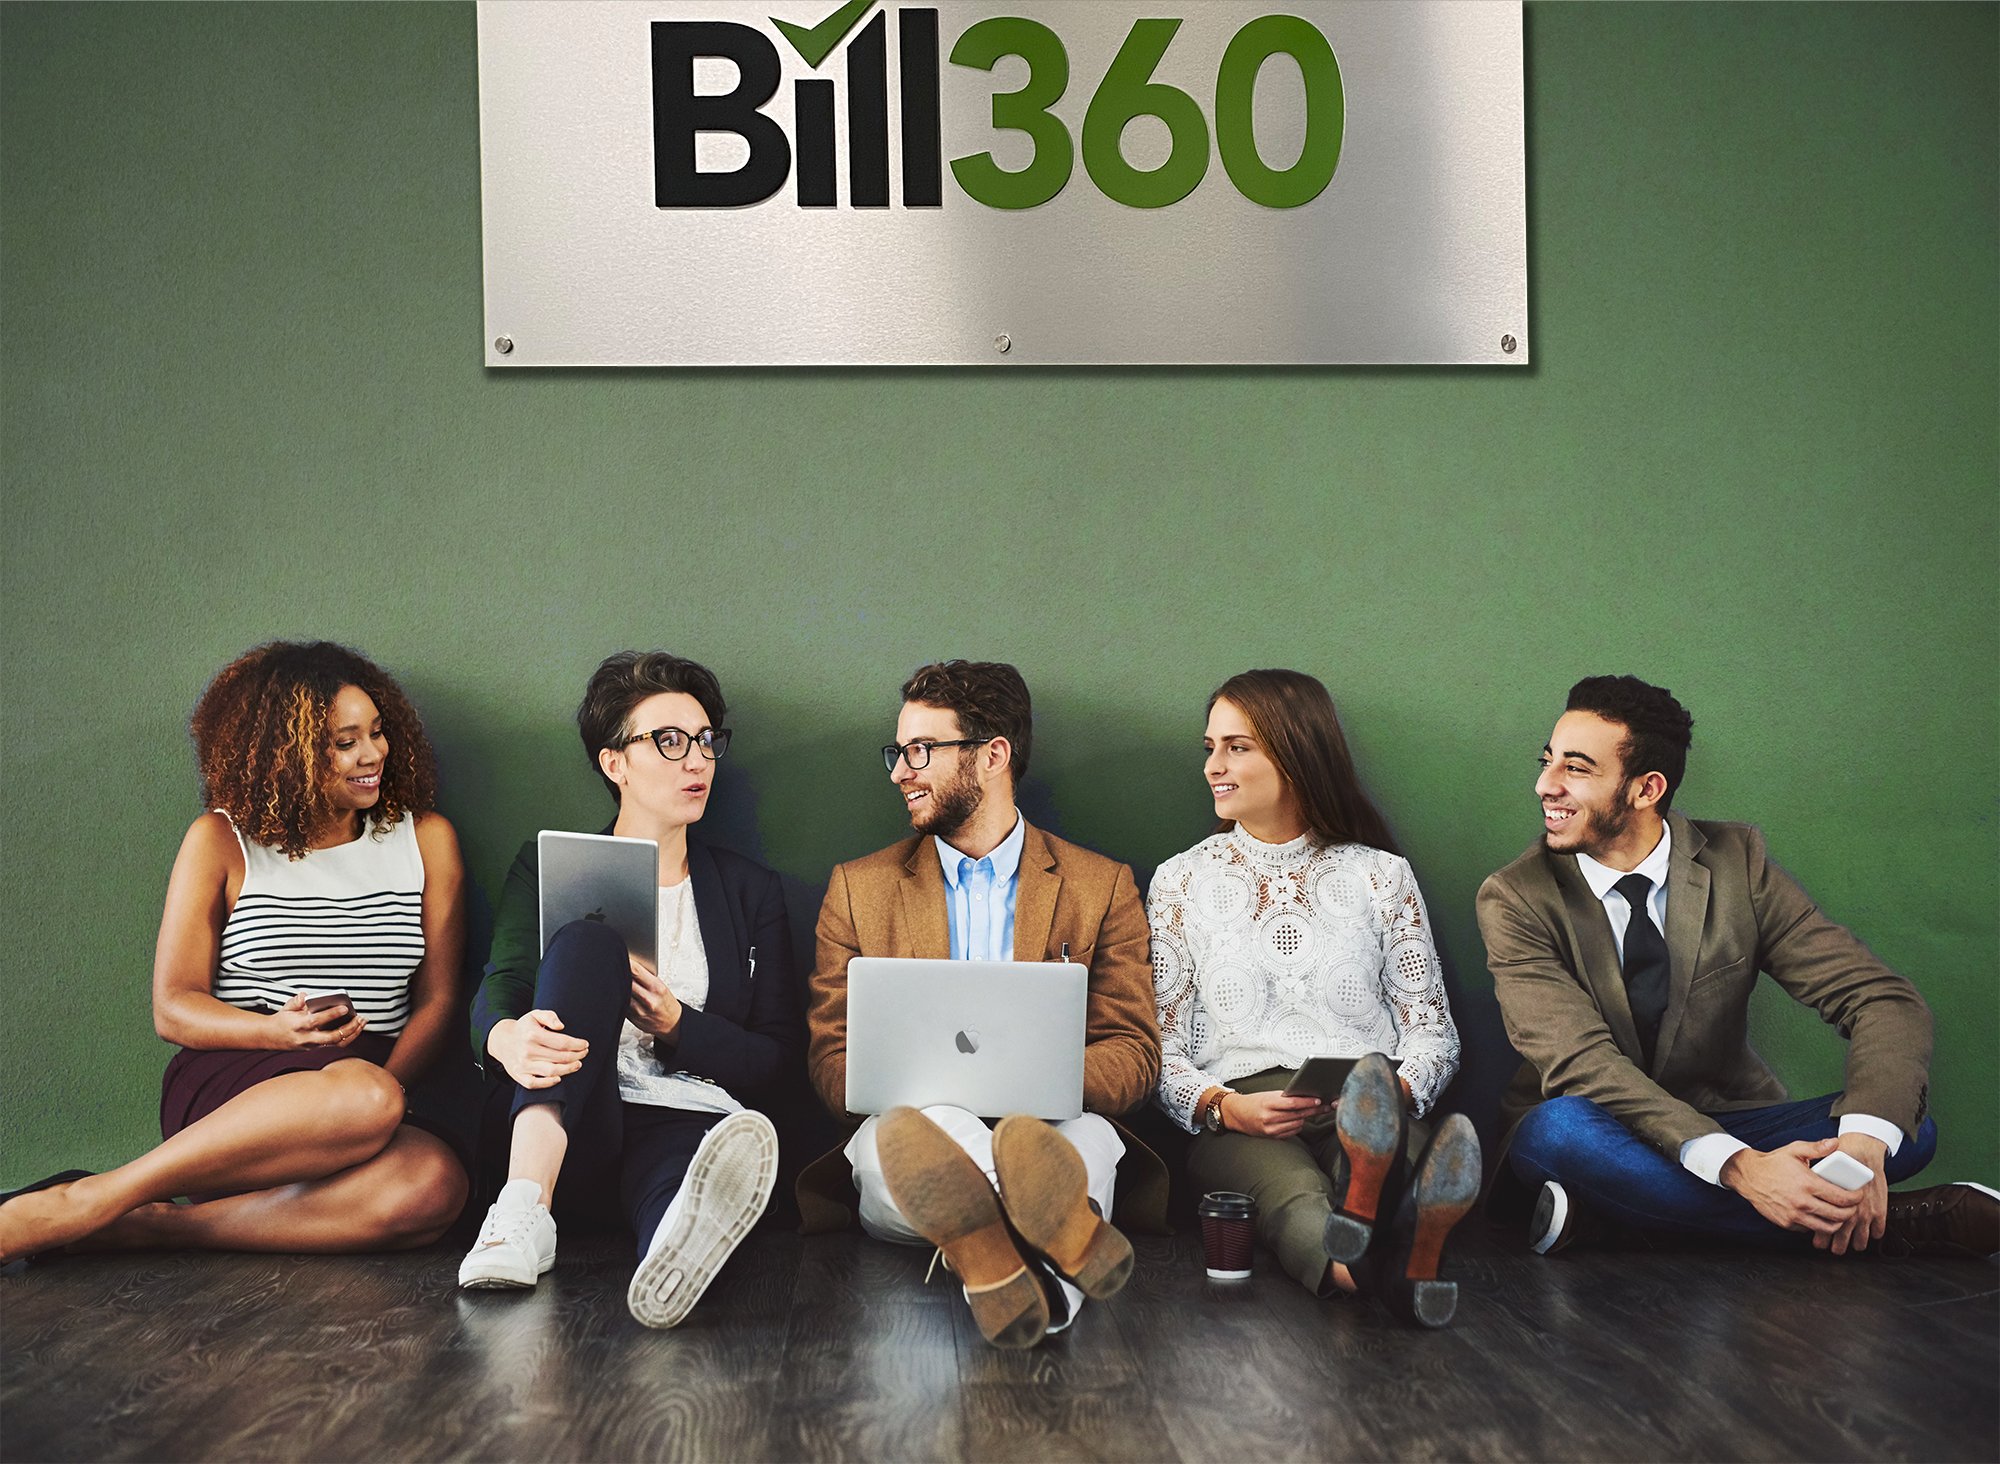 Bill360 Career Opportunities